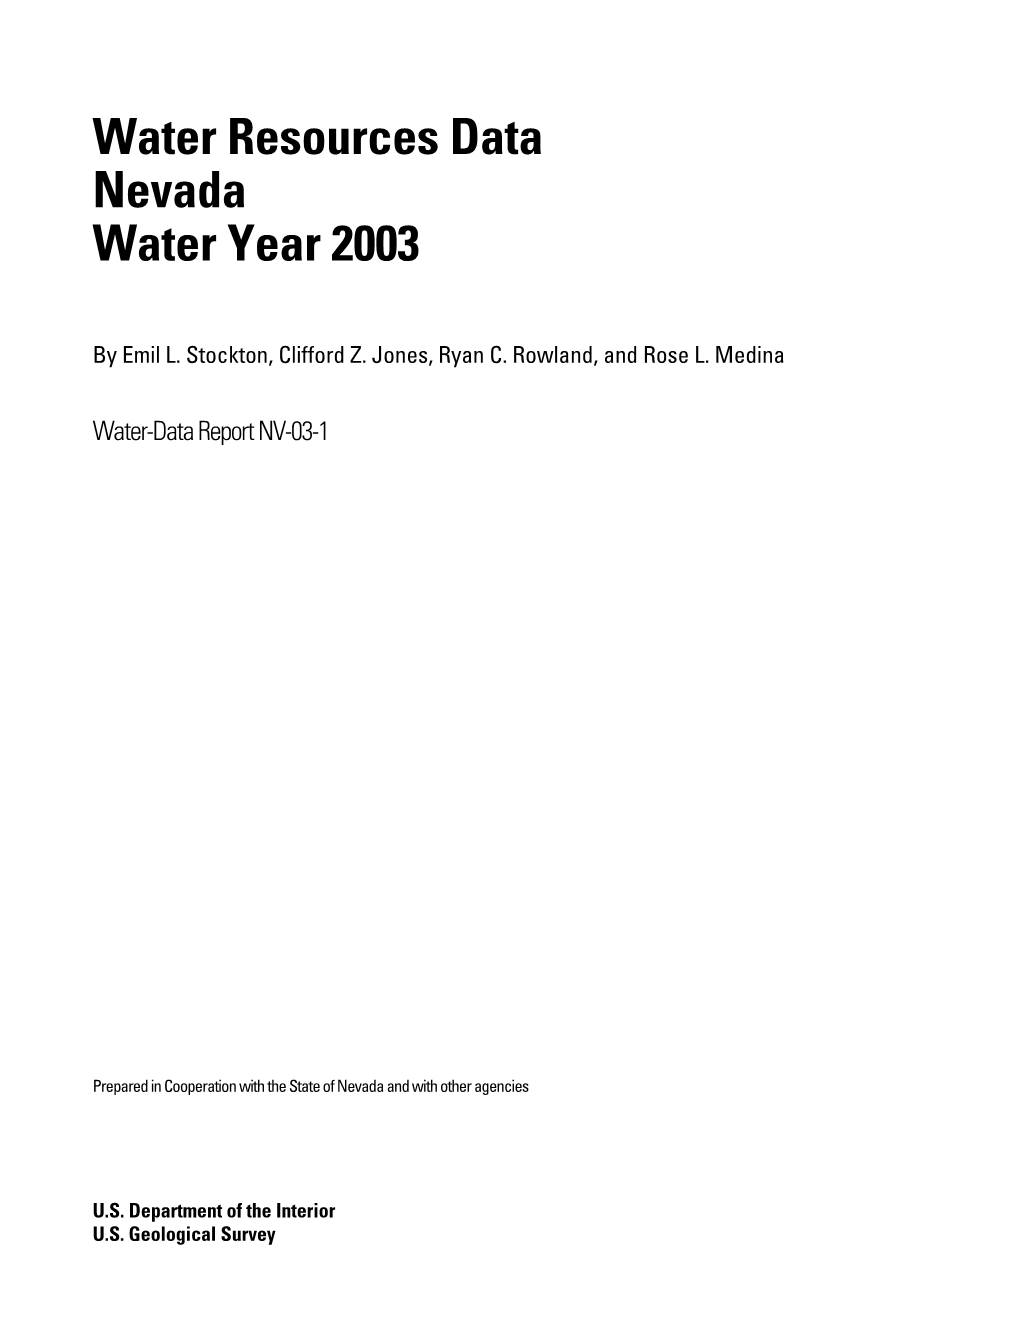 Water Resources Data Nevada Water Year 2003